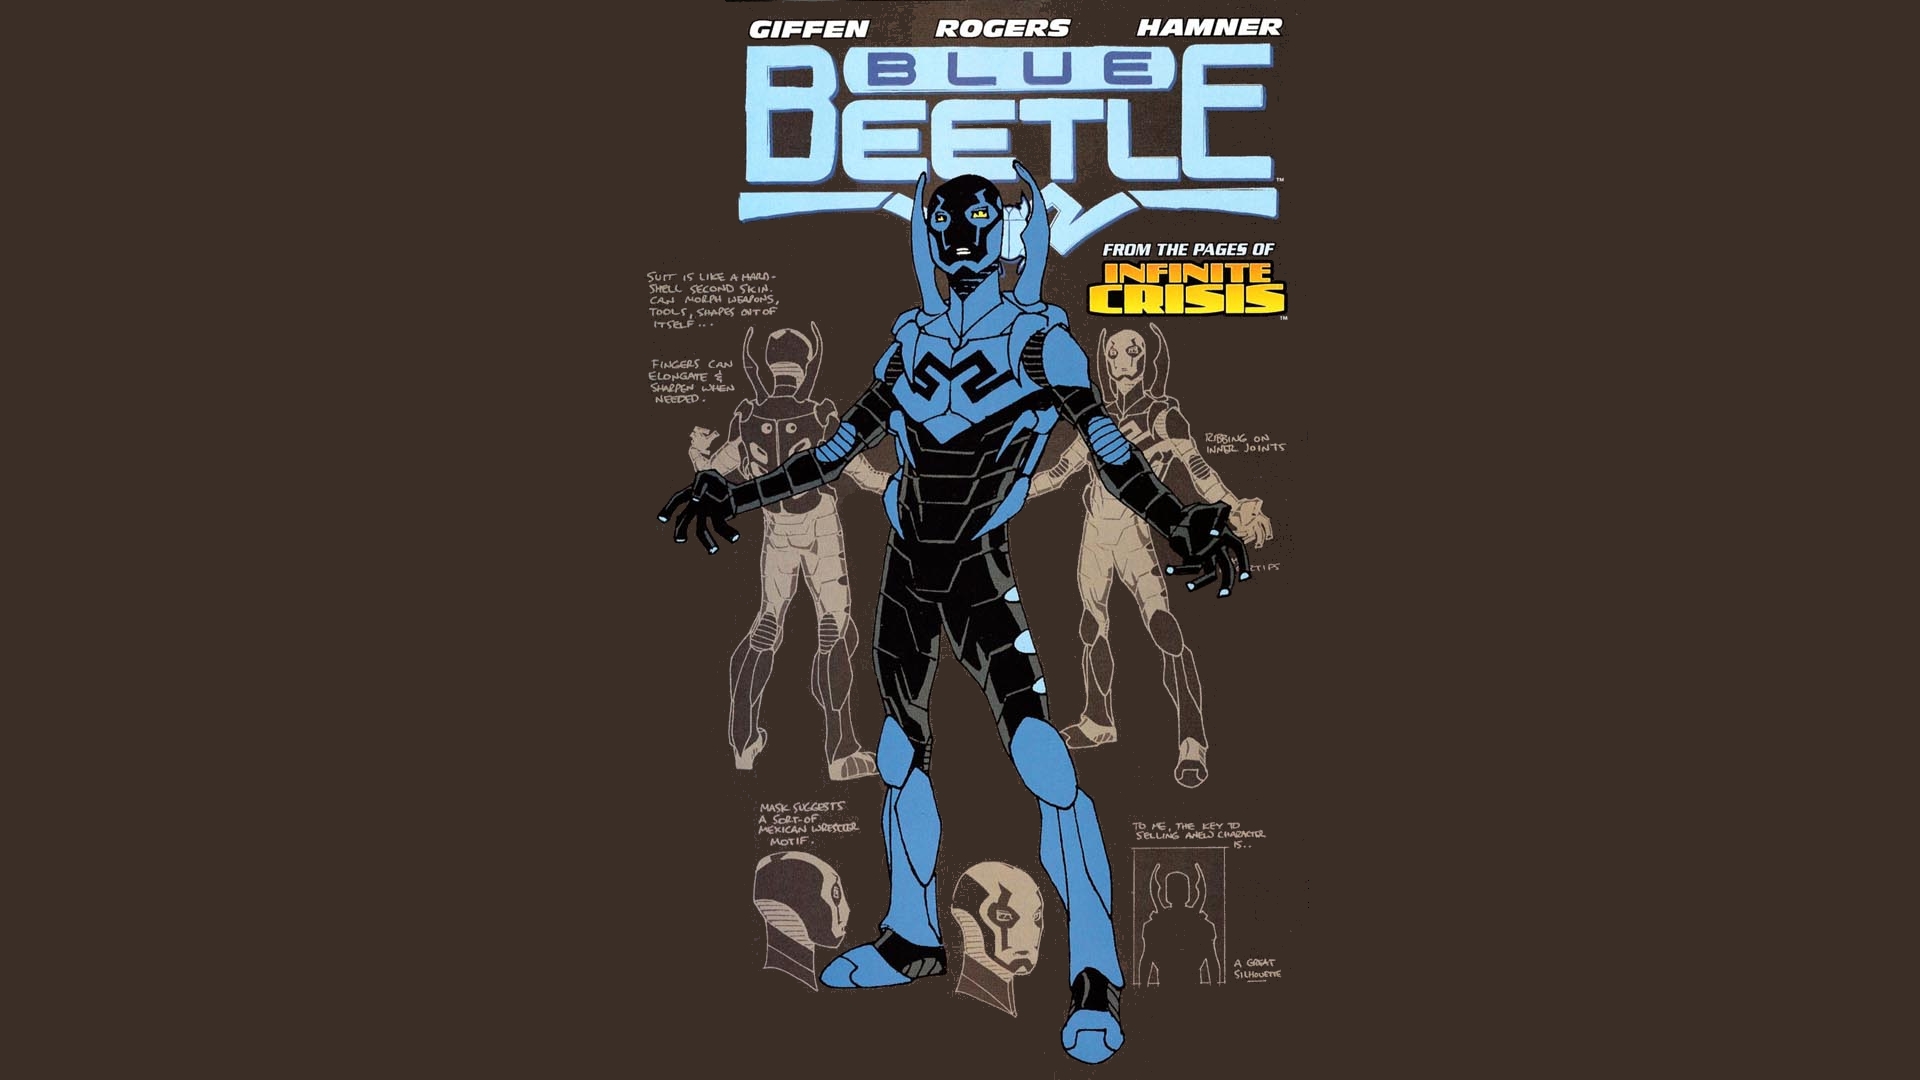 625514 Bild herunterladen comics, blue beetle, blauer käfer (dc comics), dc comics, jaime reyes - Hintergrundbilder und Bildschirmschoner kostenlos